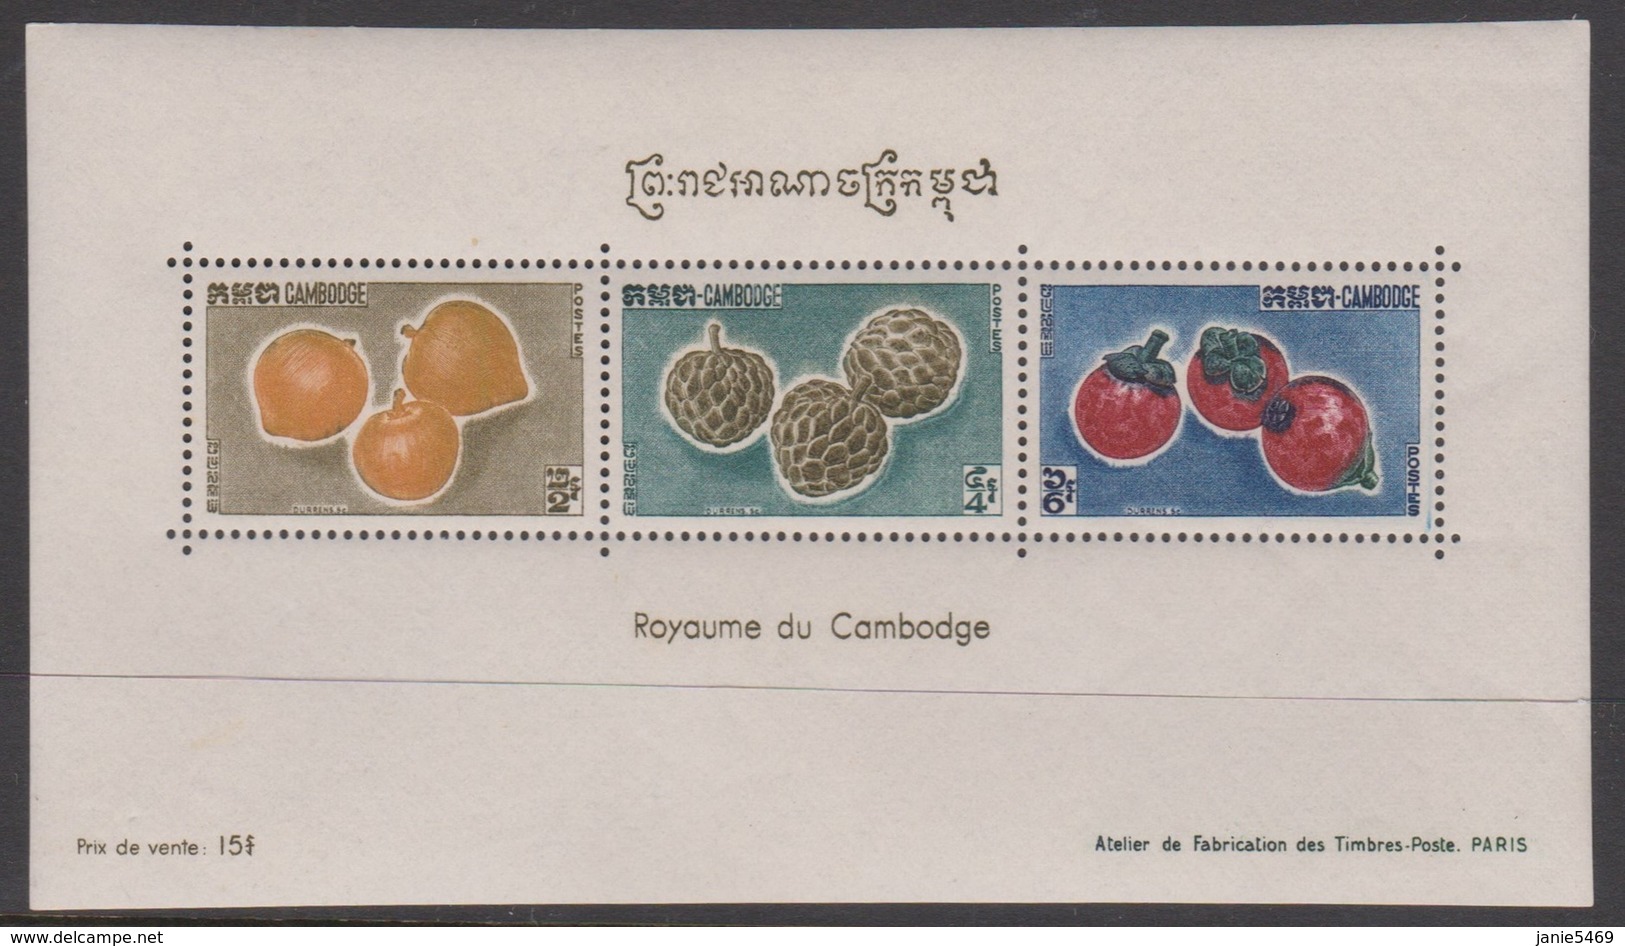 Cambodia Scott 111a 1962 Fruits Souvenir Sheet, Mint Never Hinged - Cambodia